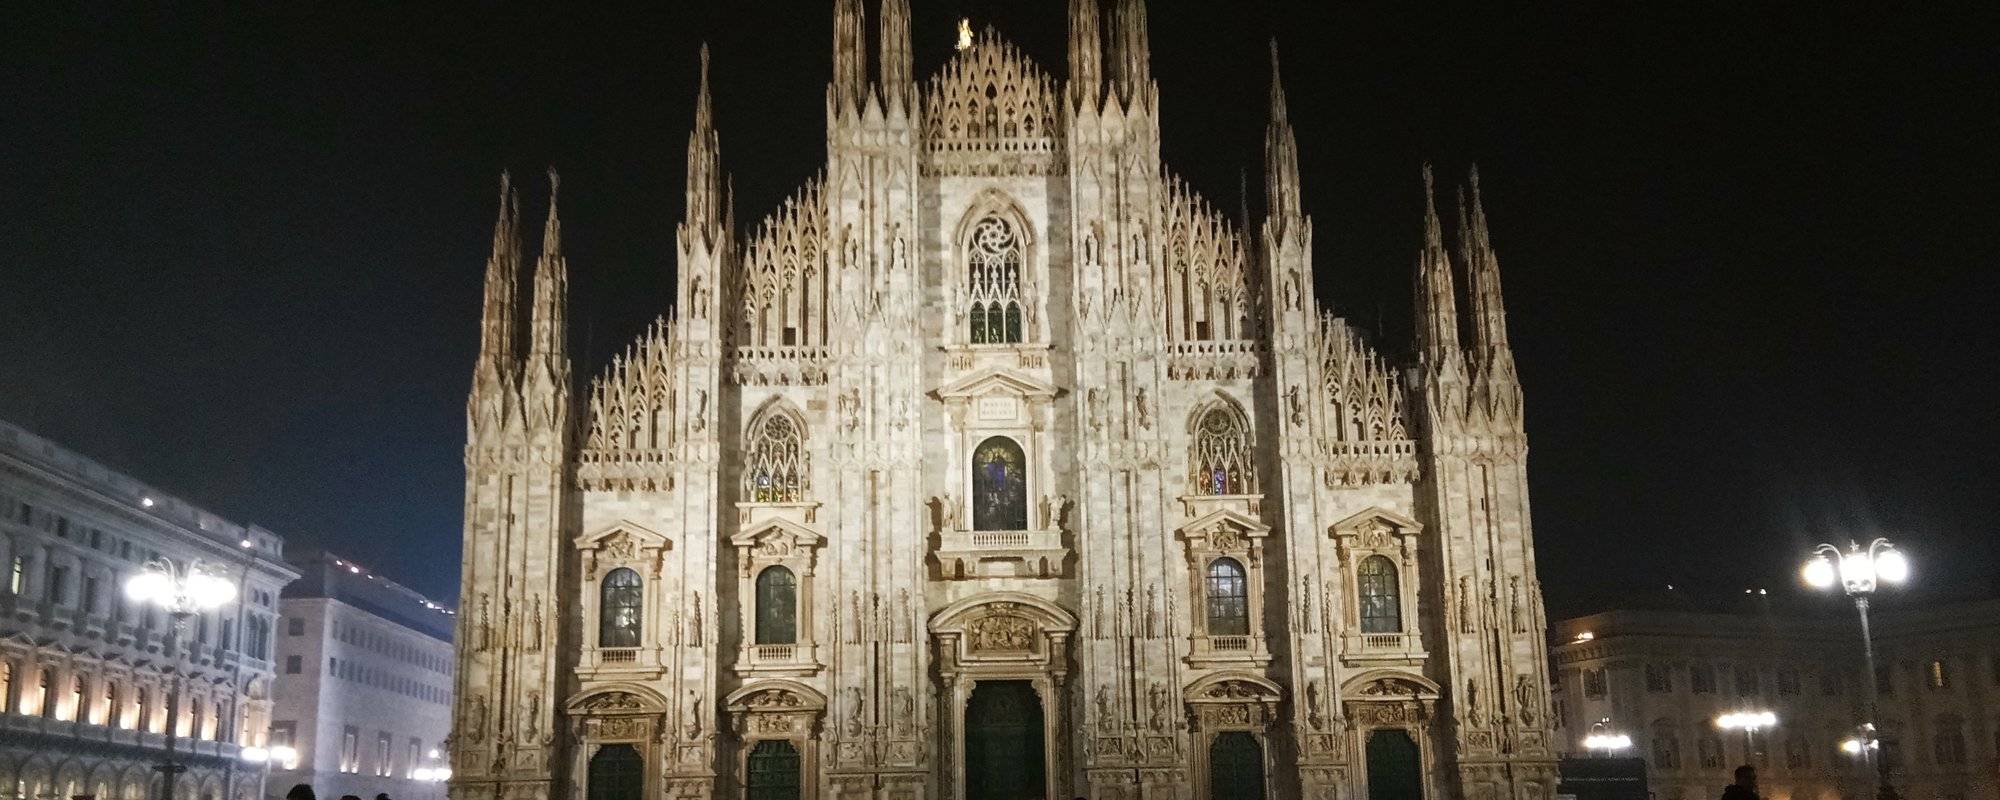 Duomo Di Milano - Exploring Milan #1